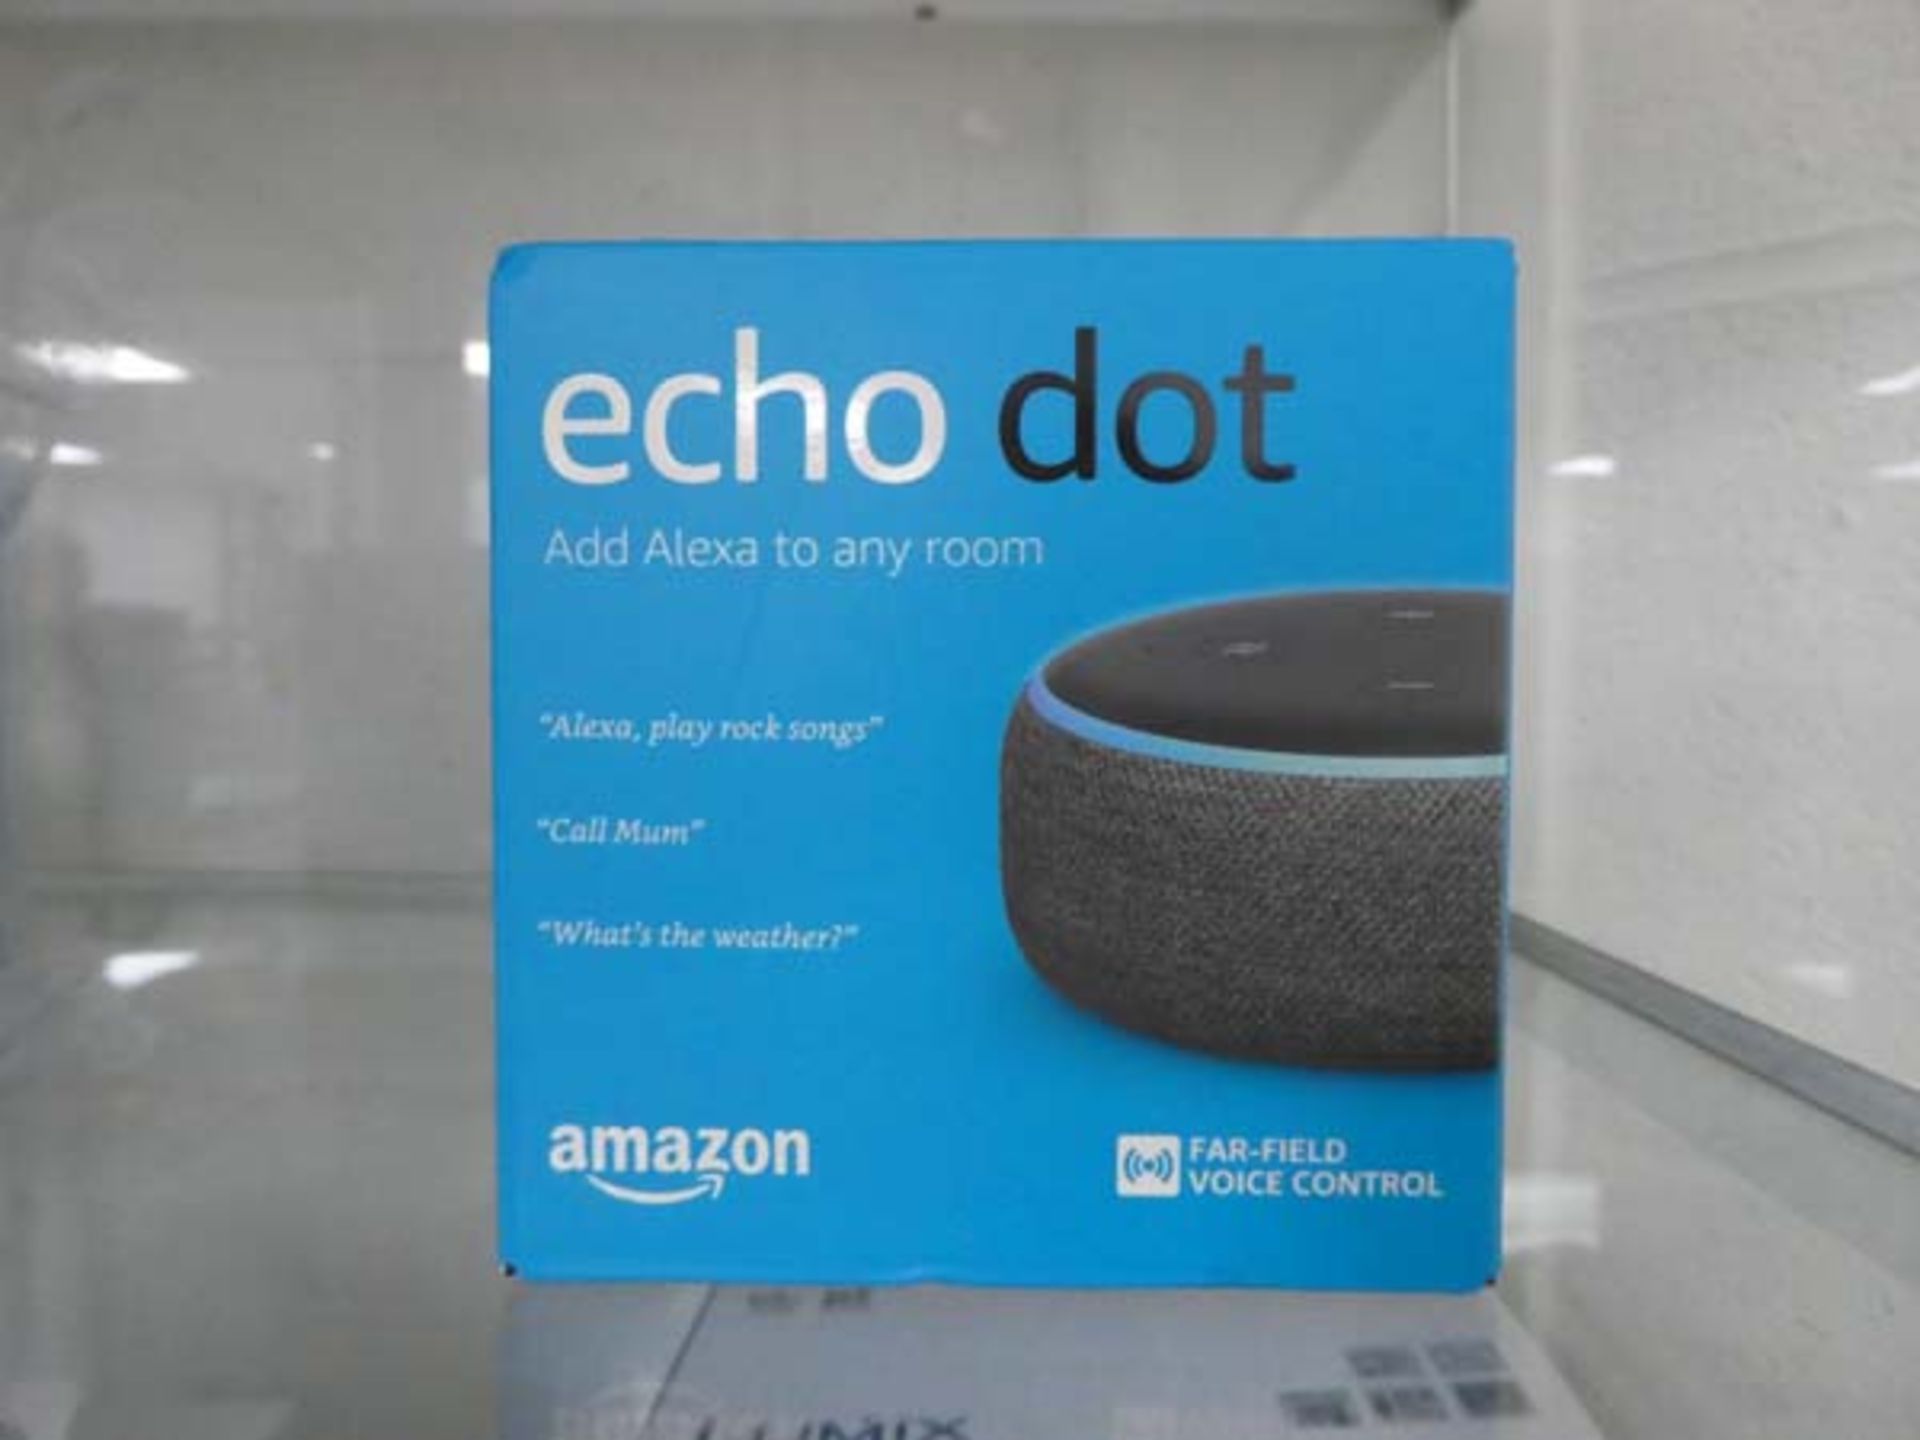 Amazon Echo Dot with box